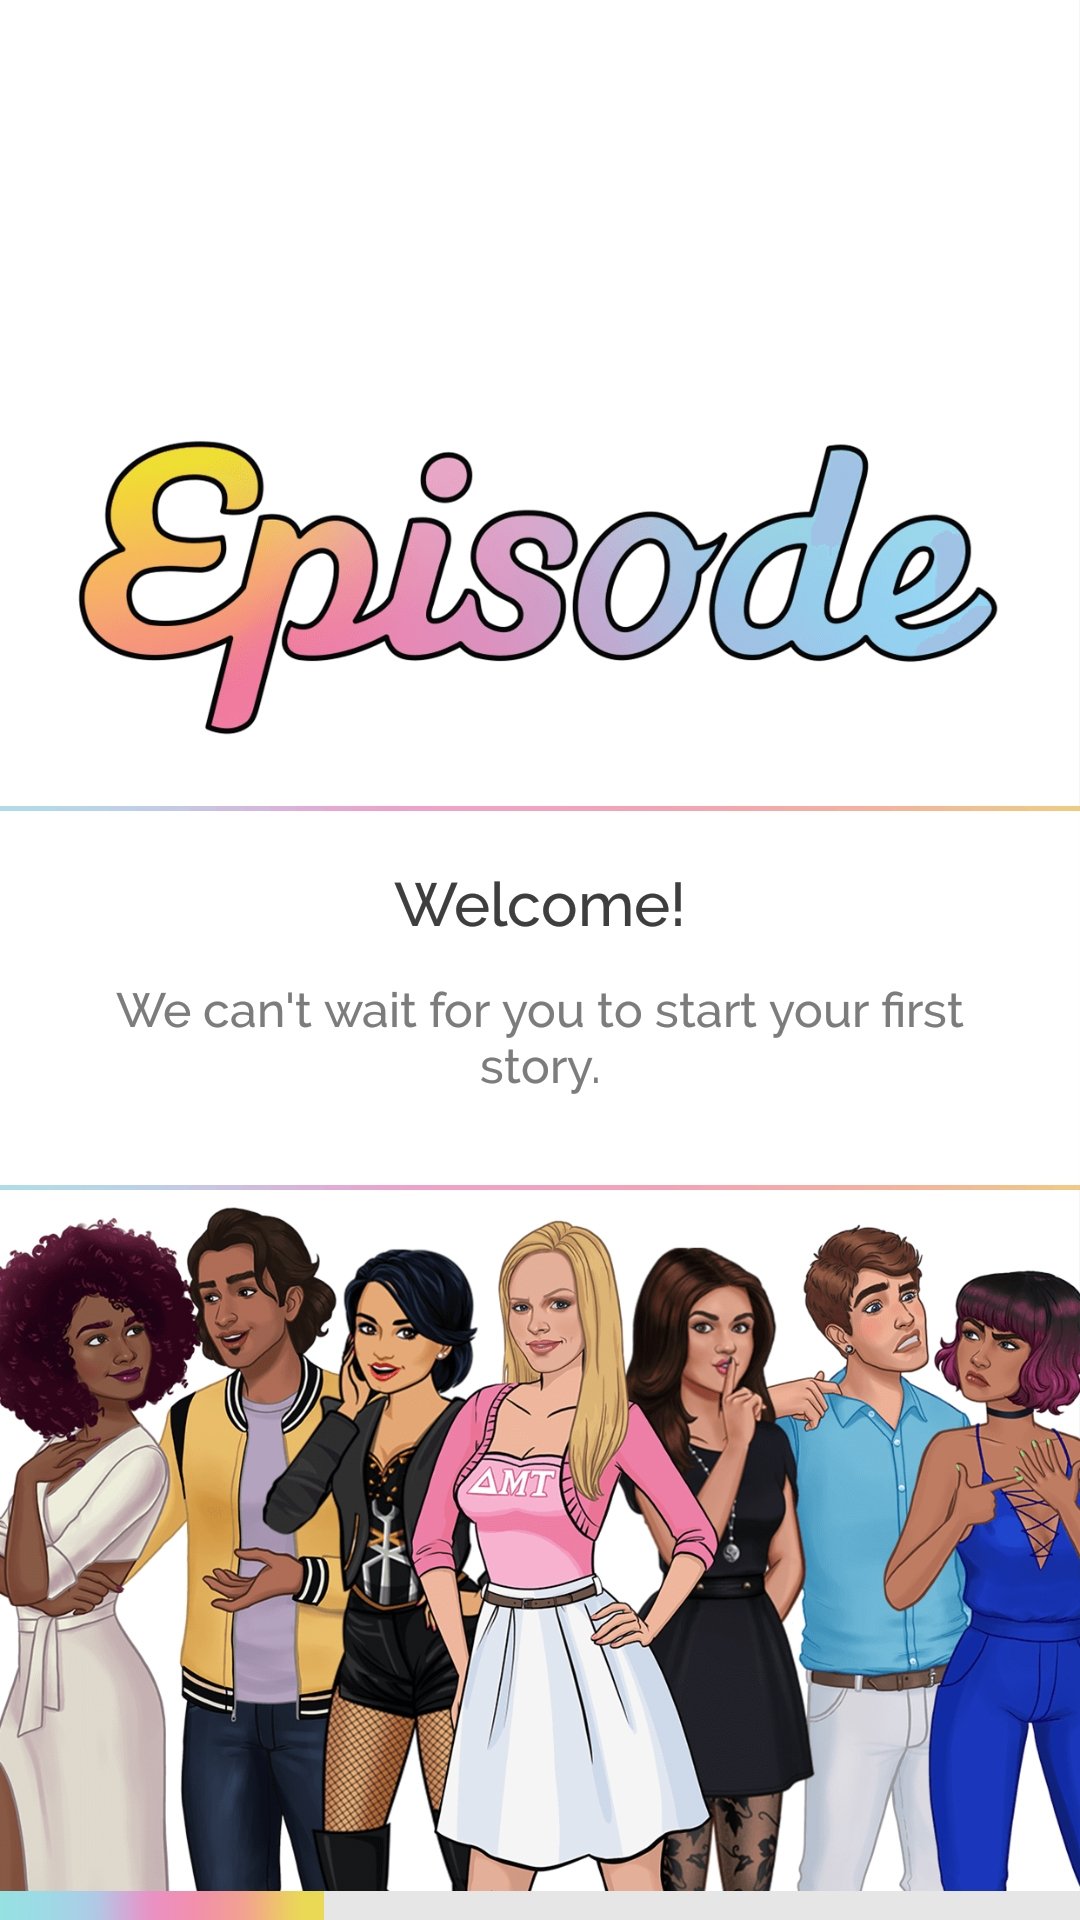 episode download game